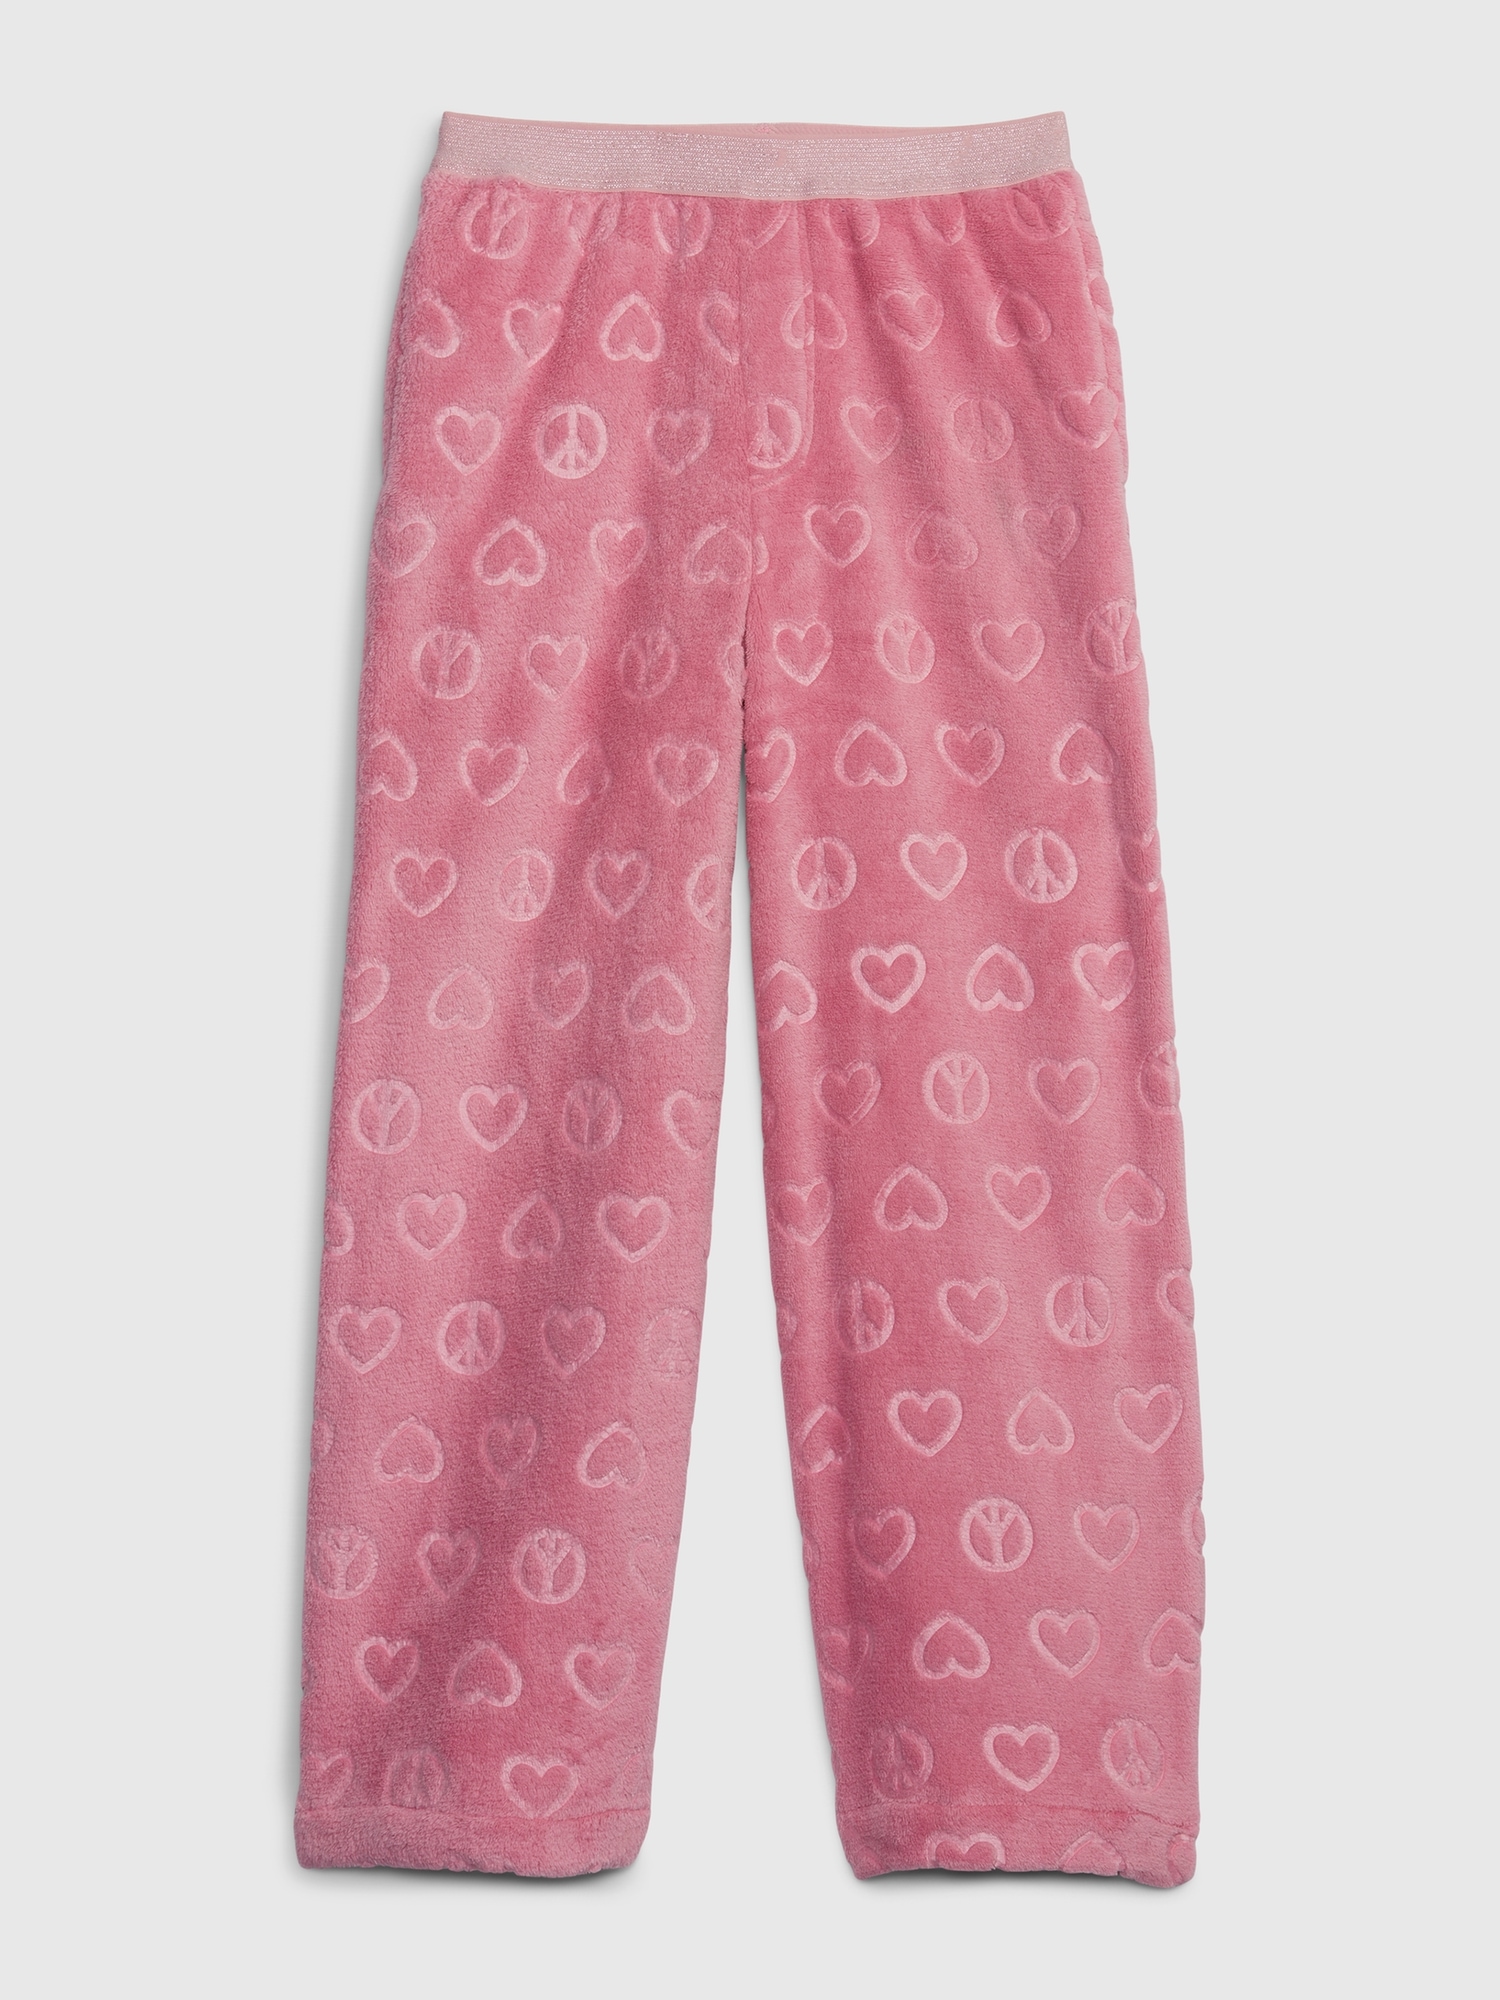 Evening Primrose: Easy Pajama Pants Pattern for Kids - Cucicucicoo